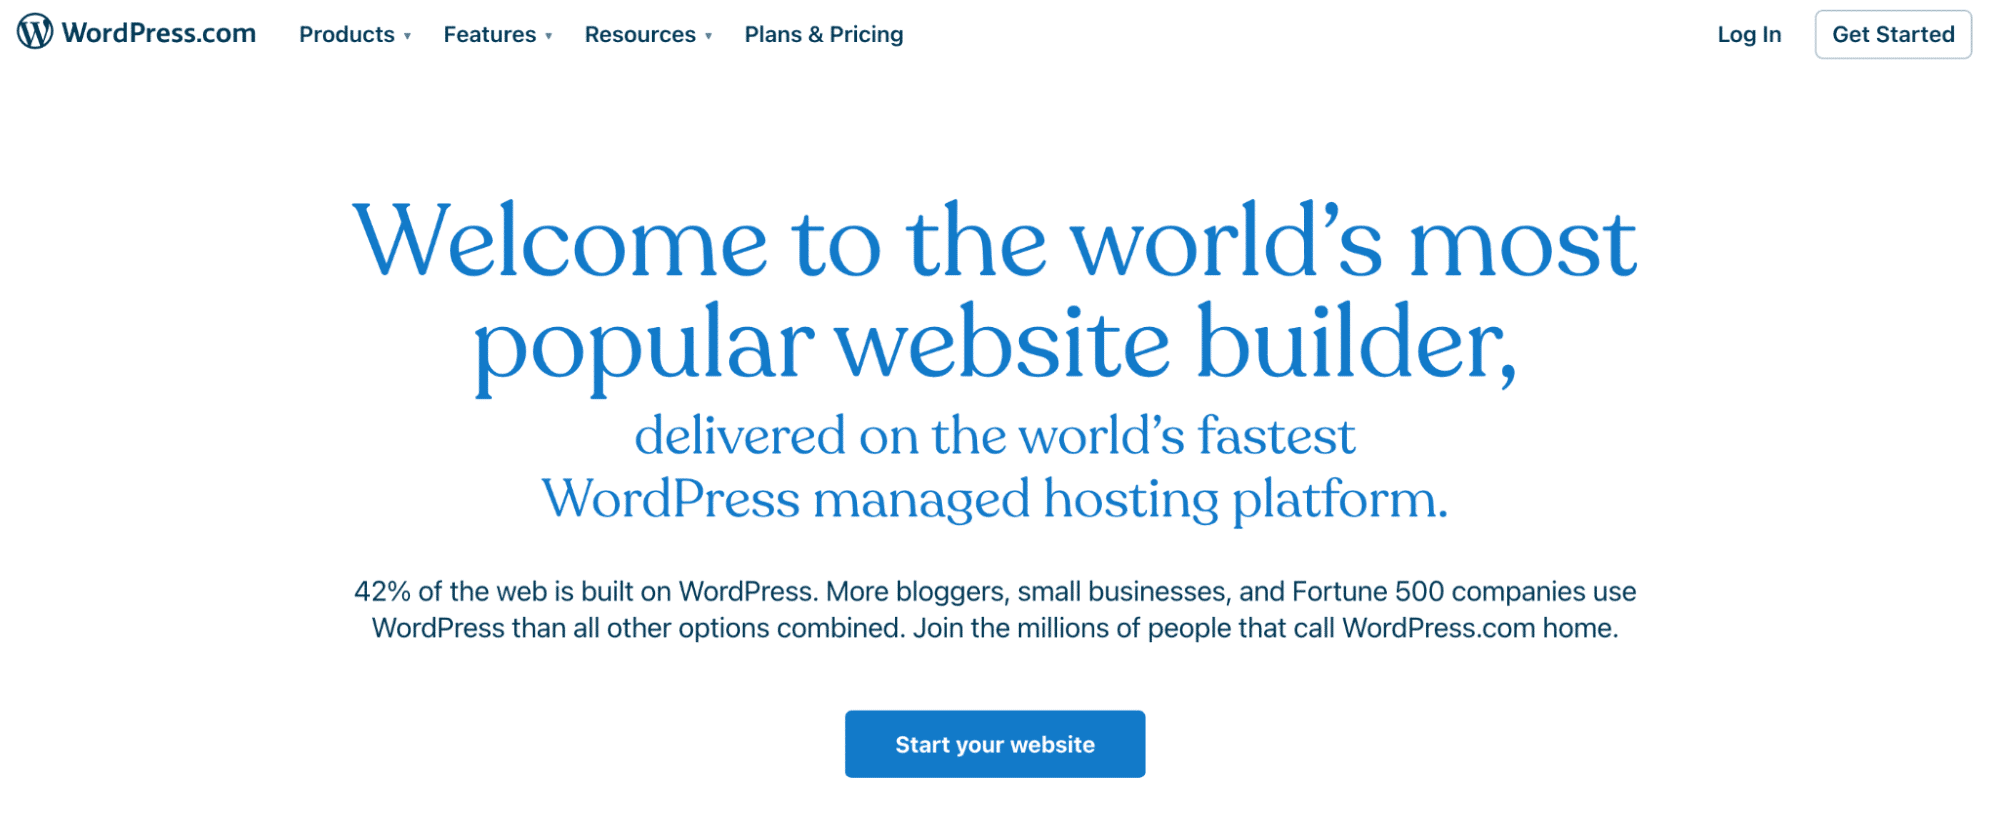 WordPress.com Homepage 